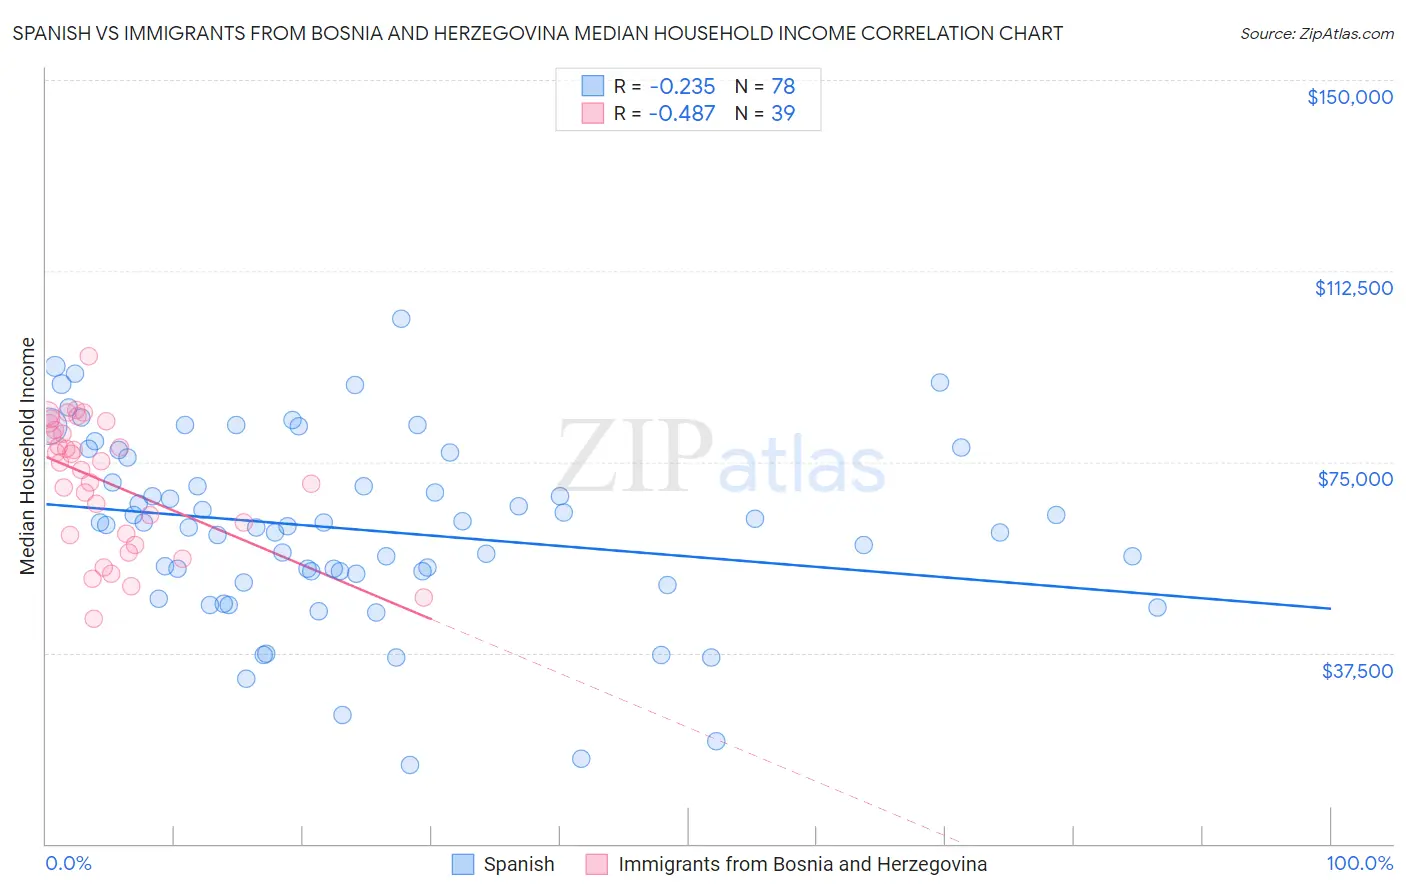 Spanish vs Immigrants from Bosnia and Herzegovina Median Household Income